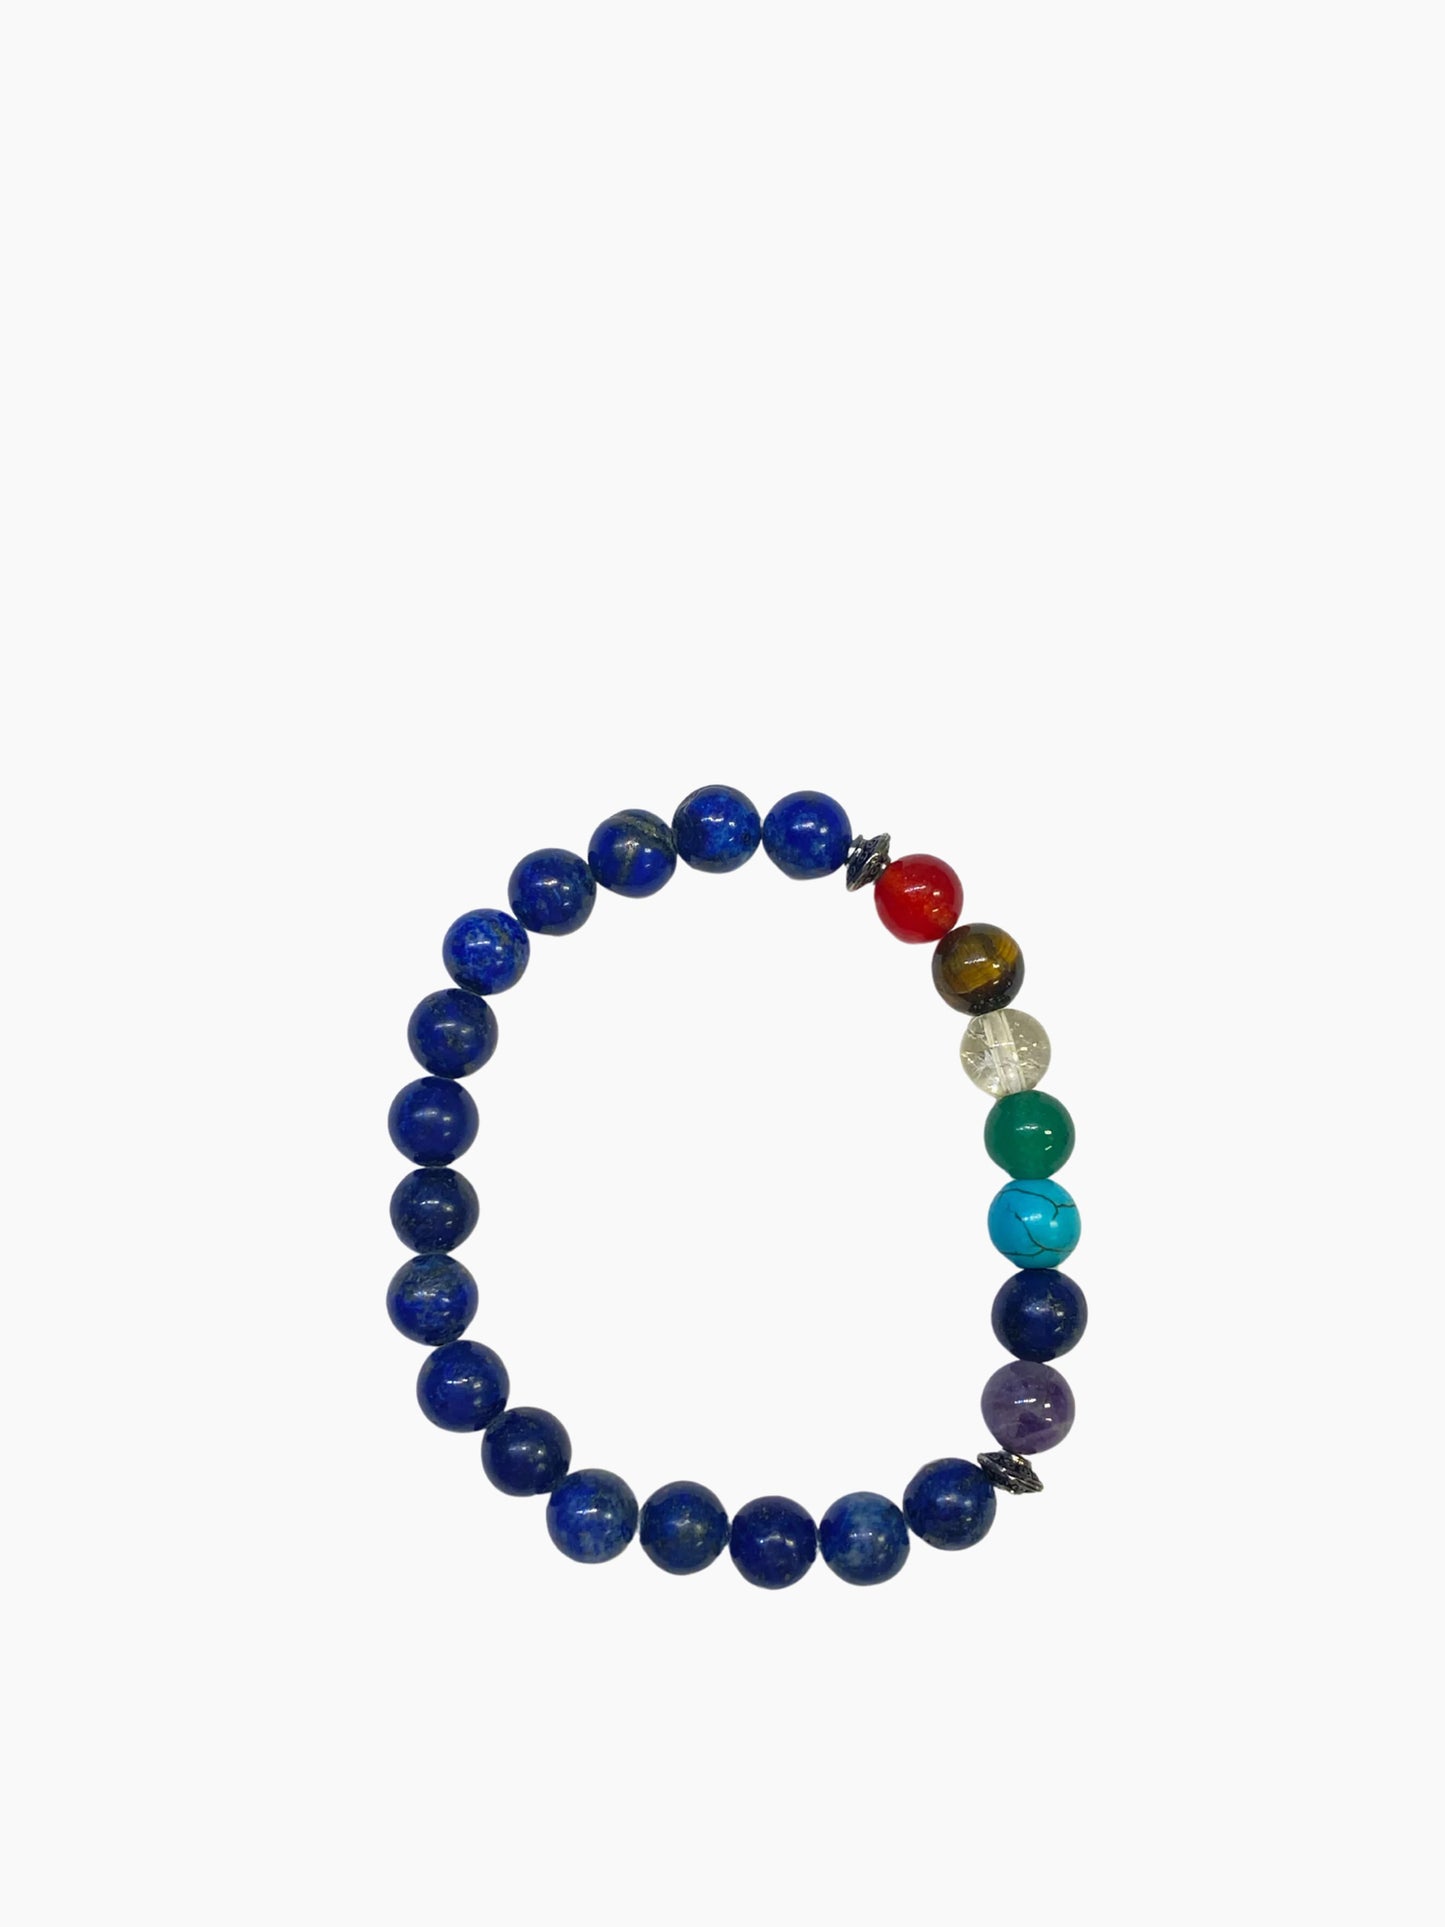 Lapis Lazuli 7 Chakra Healing Bracelet ~ Awareness, Healing, & Alignment